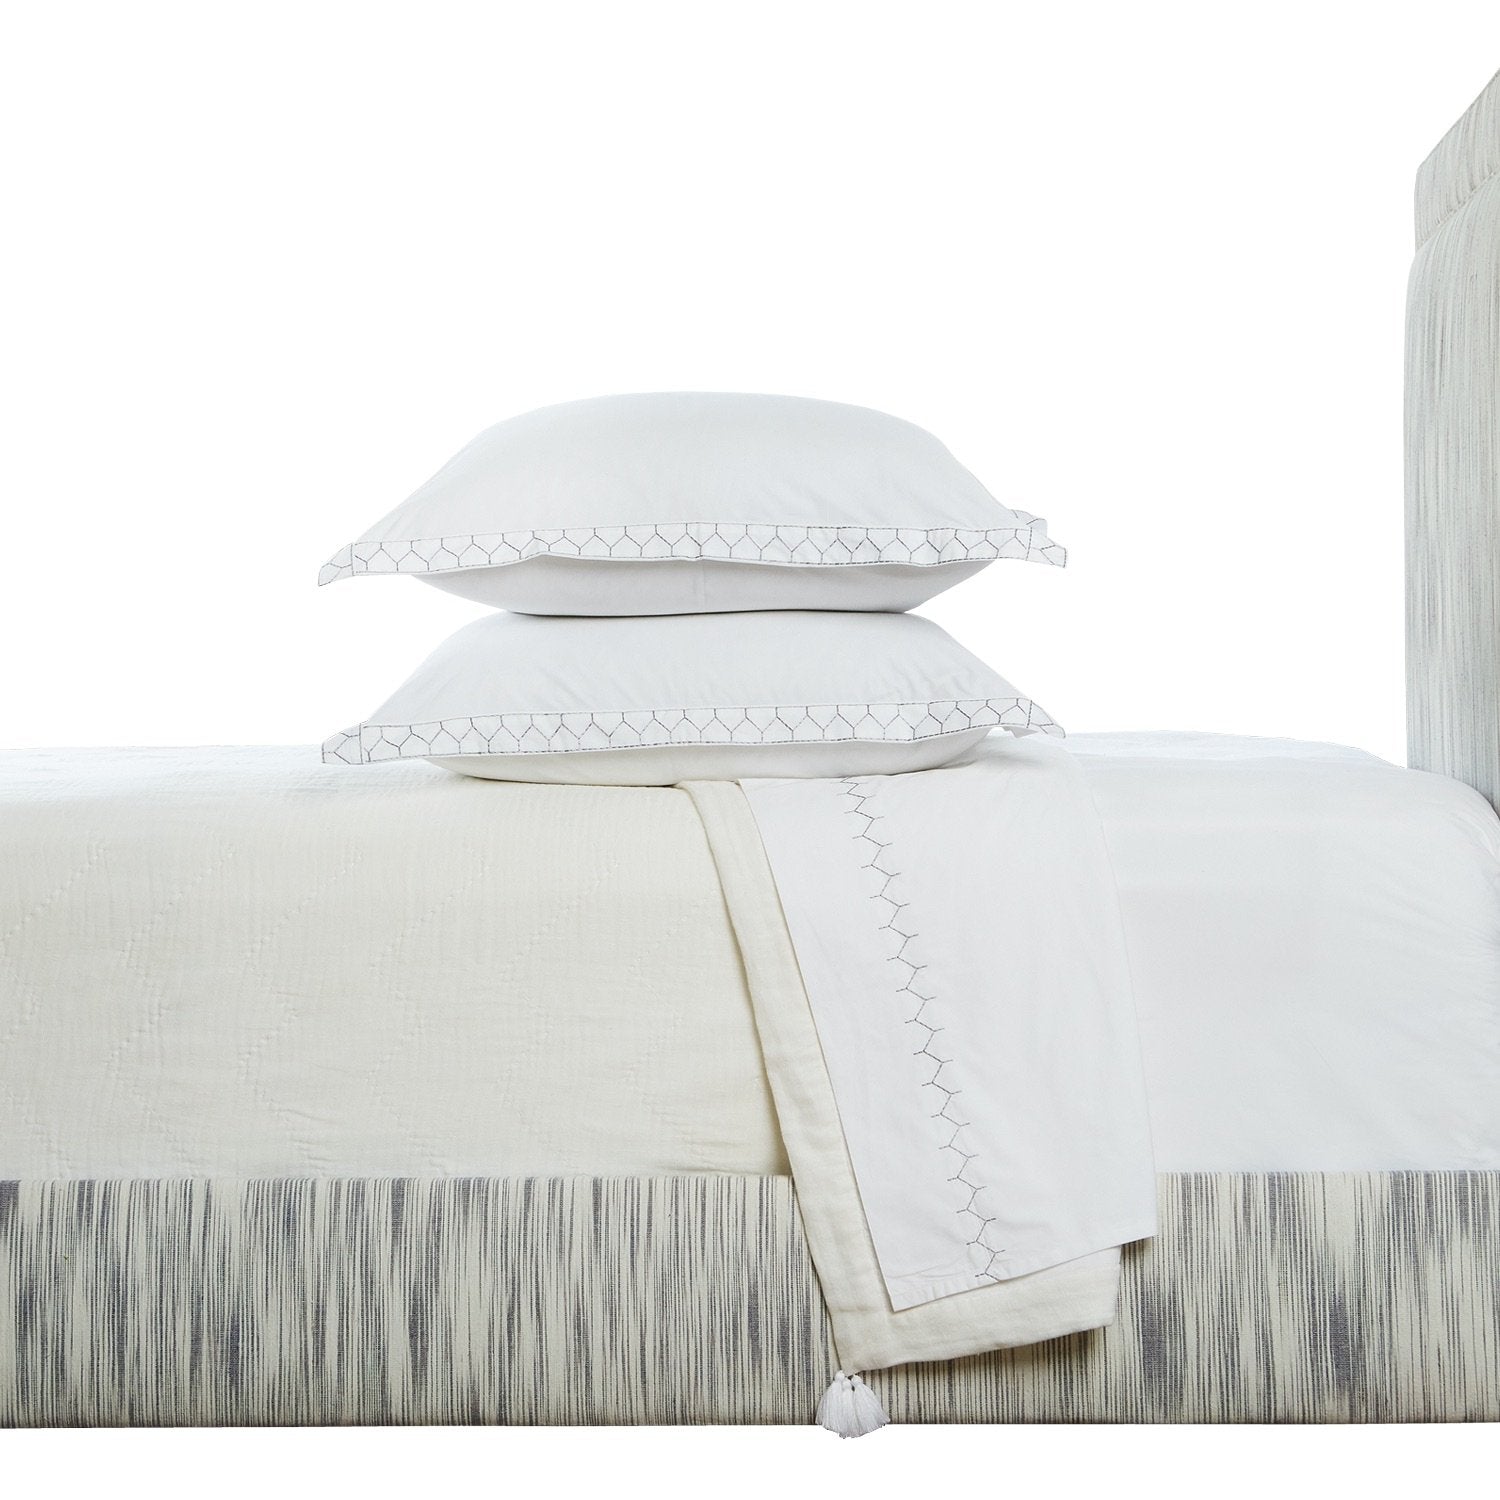 Beautyrest Electric Micro Fleece Heated Blanket - On Sale - Bed